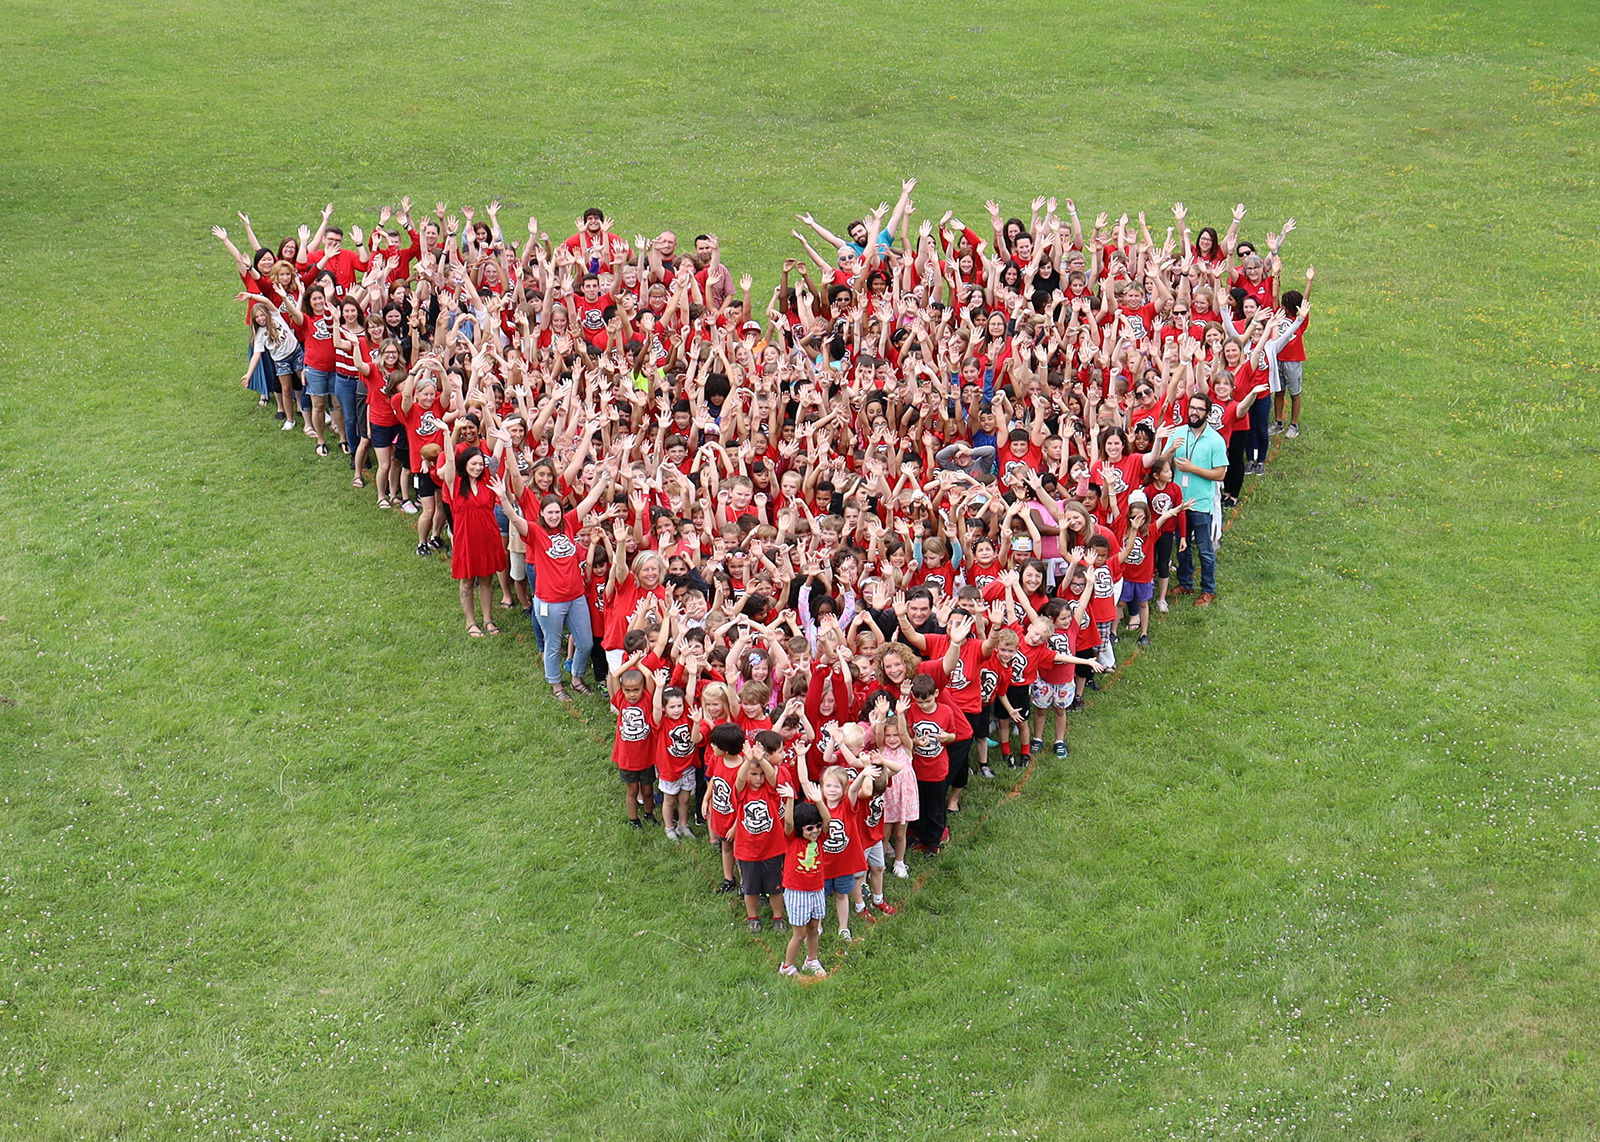 school photo in the shape of a heart